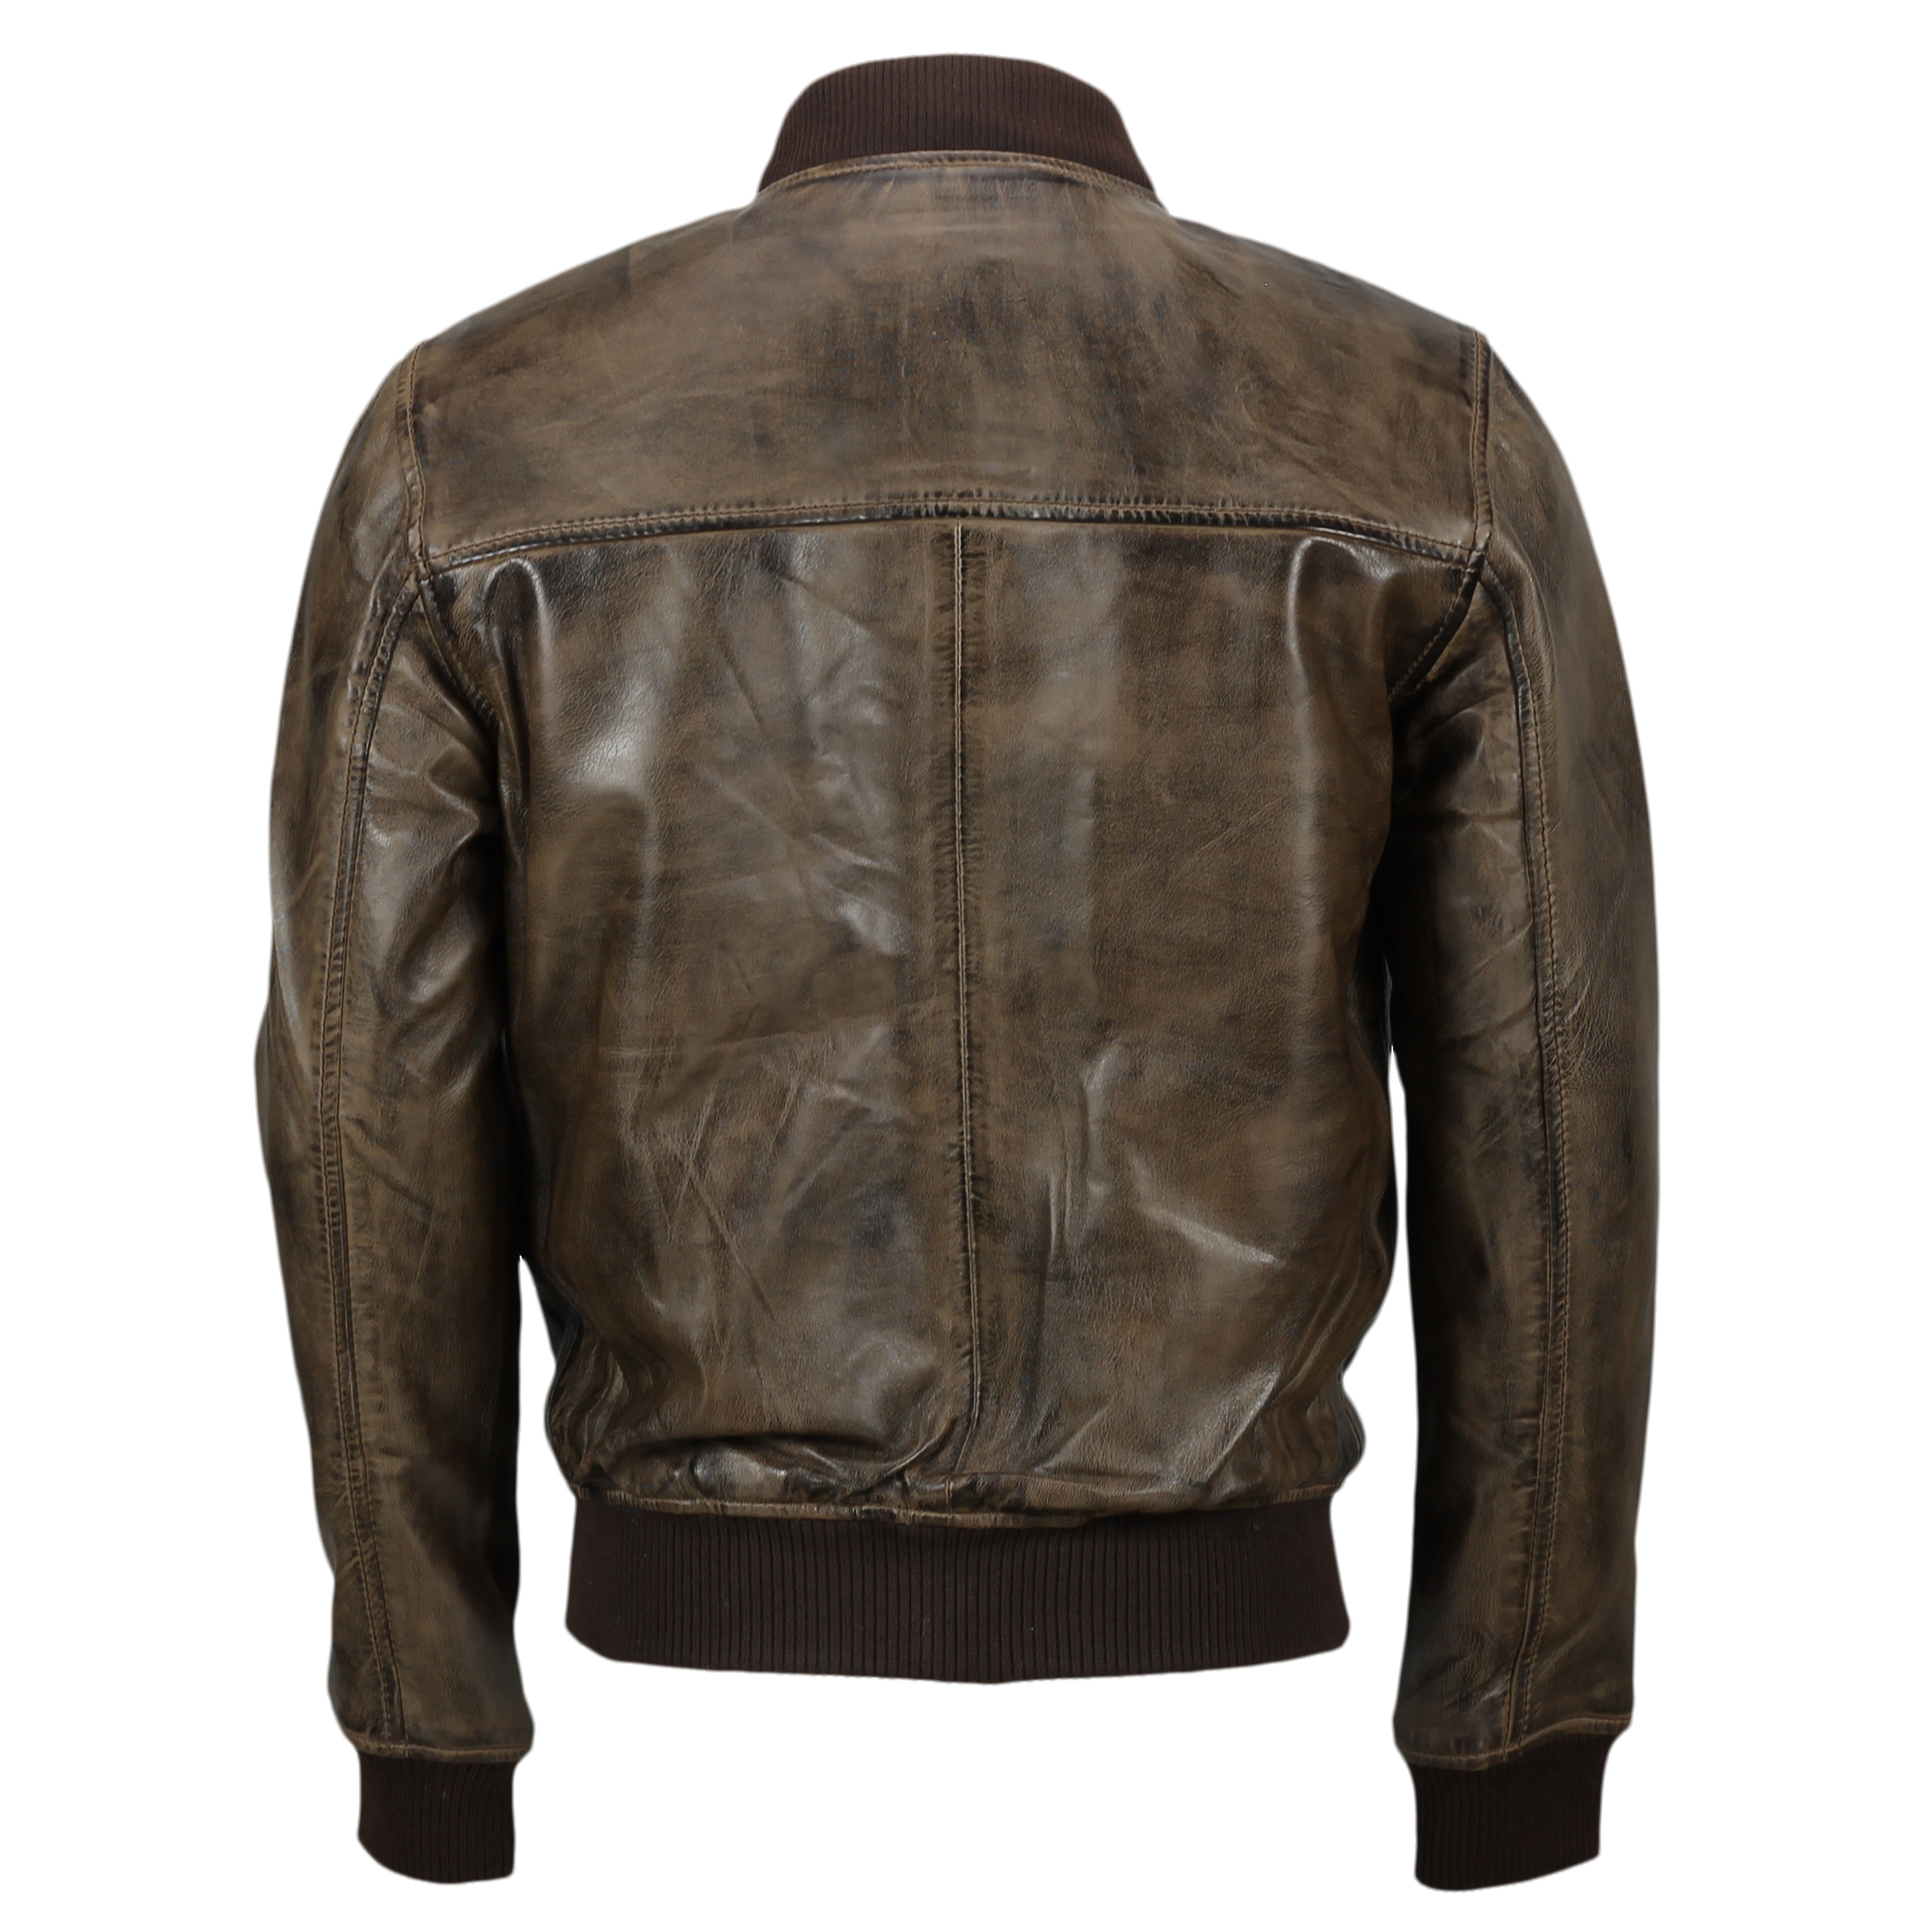 New Mens Soft Real Leather Bomber Jacket Vintage Biker Style in Black Rust Brown | eBay